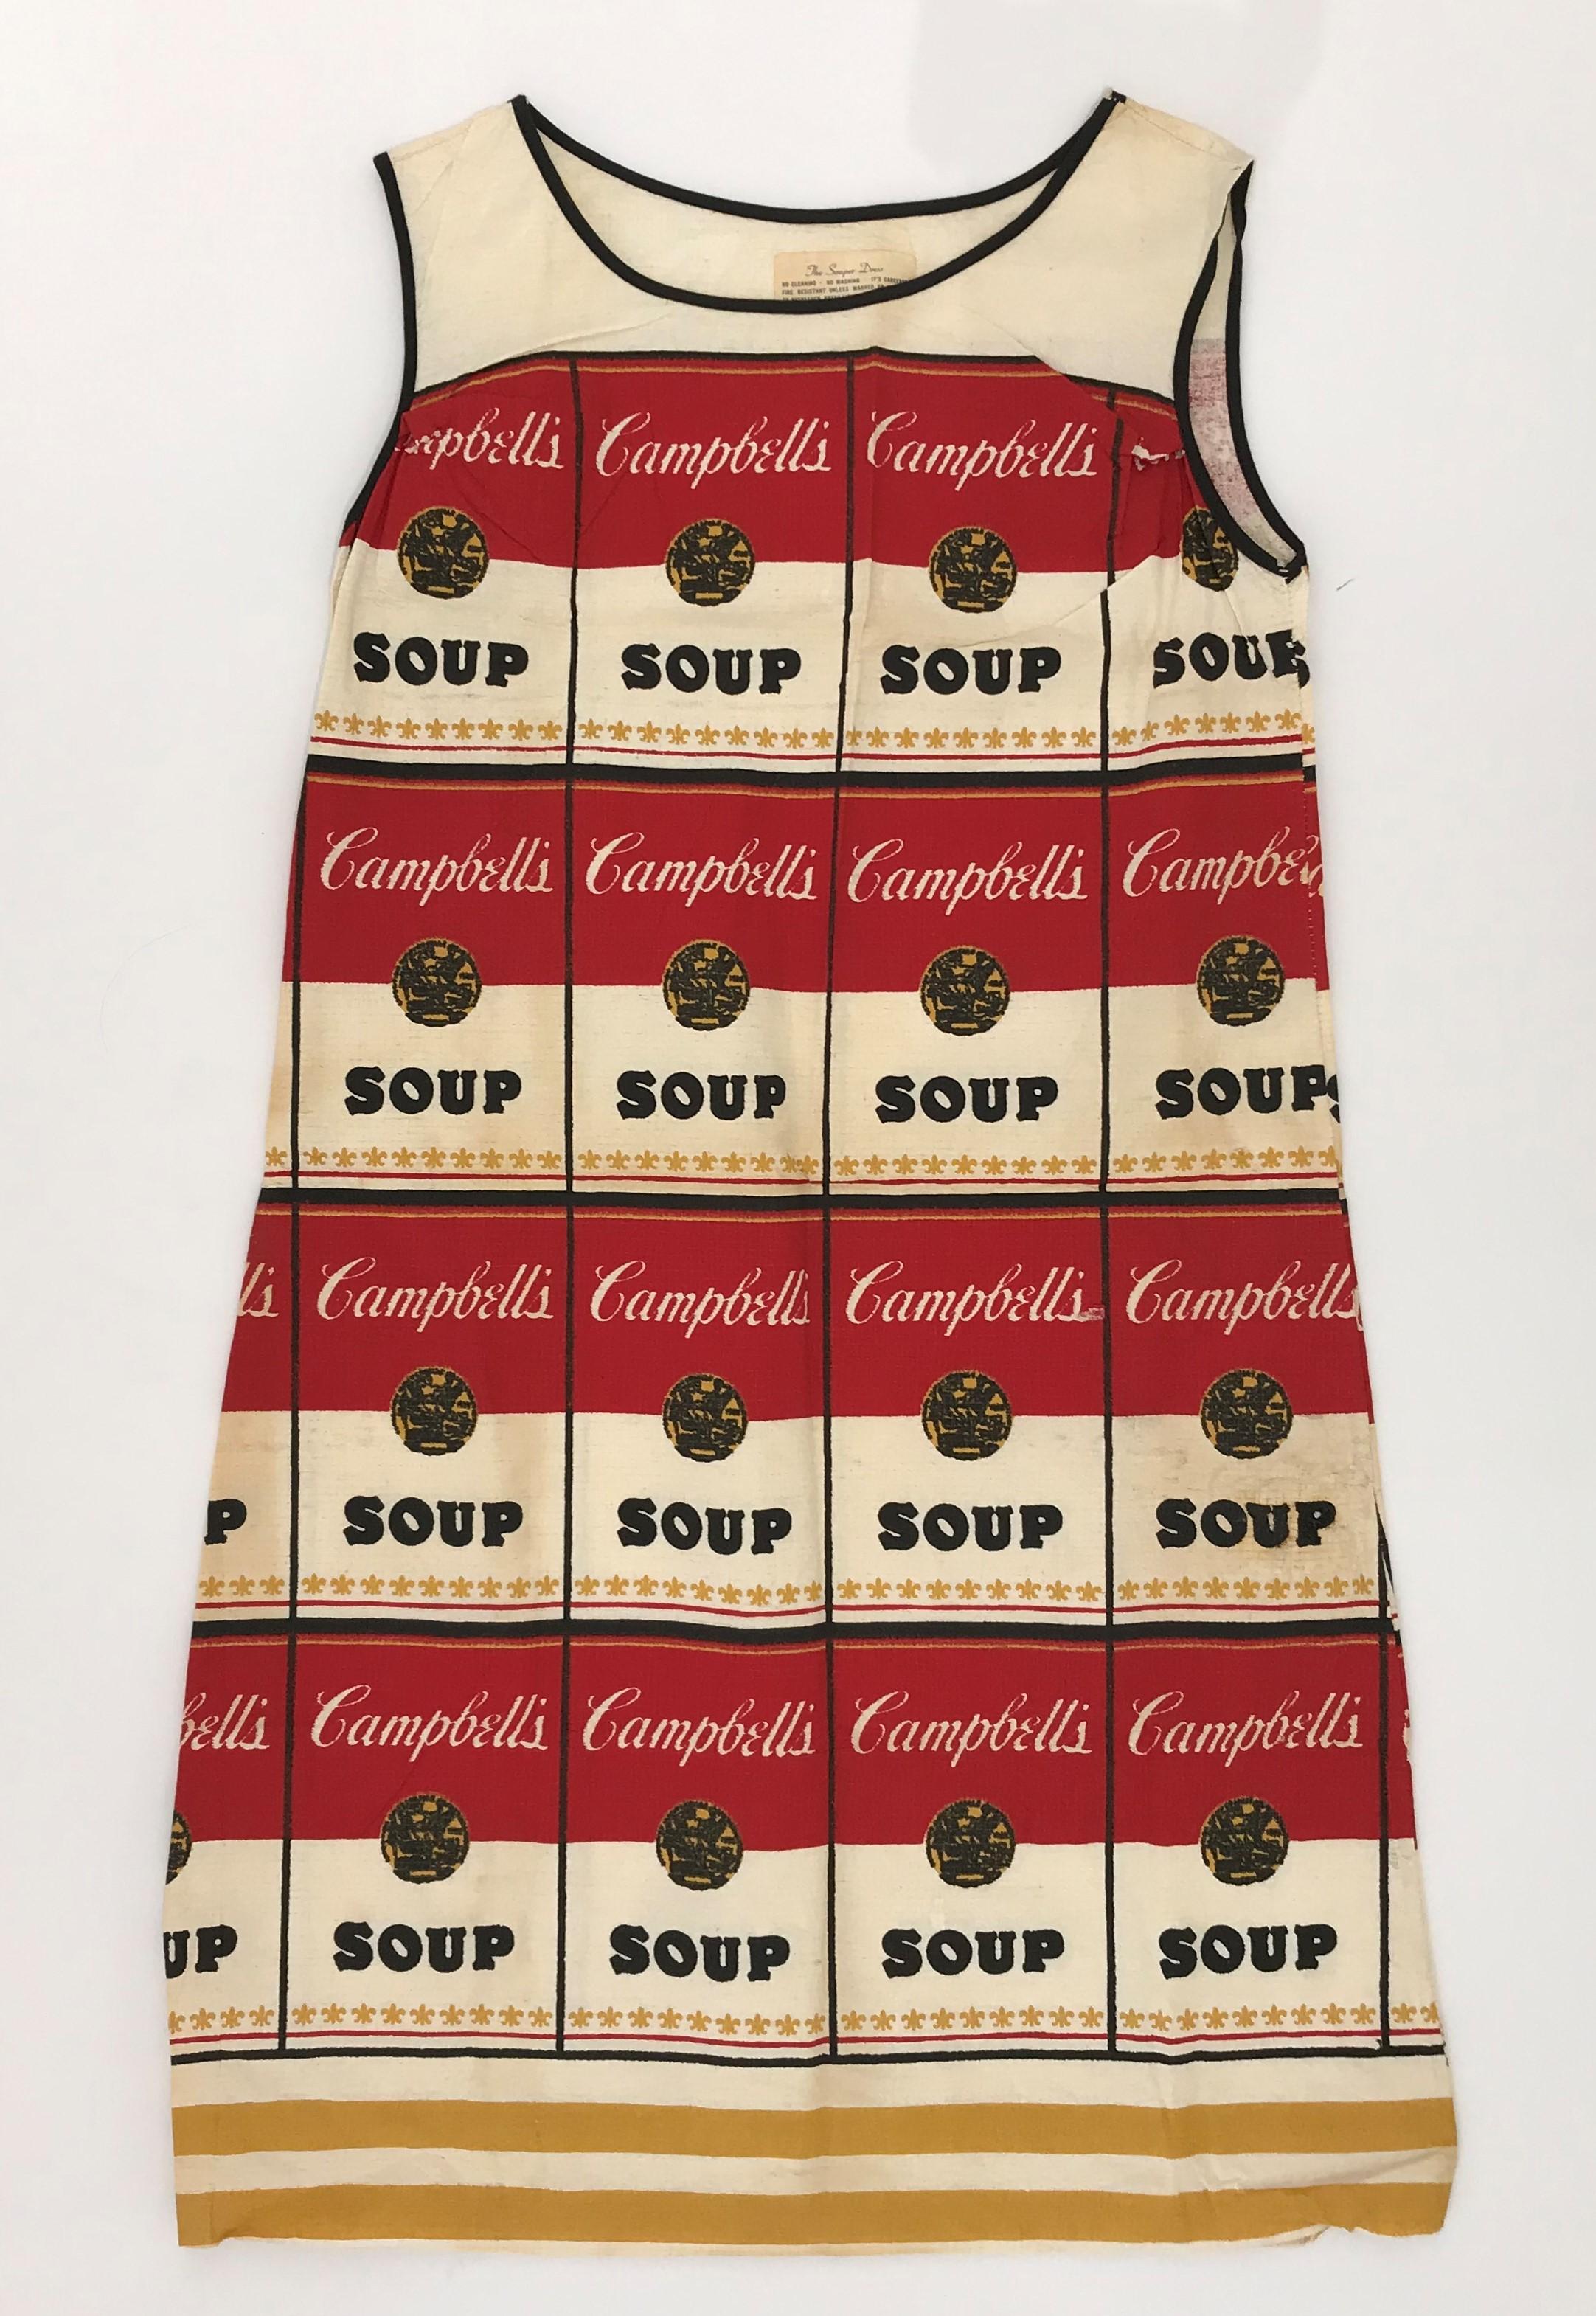 The souper dress - Art by Andy Warhol